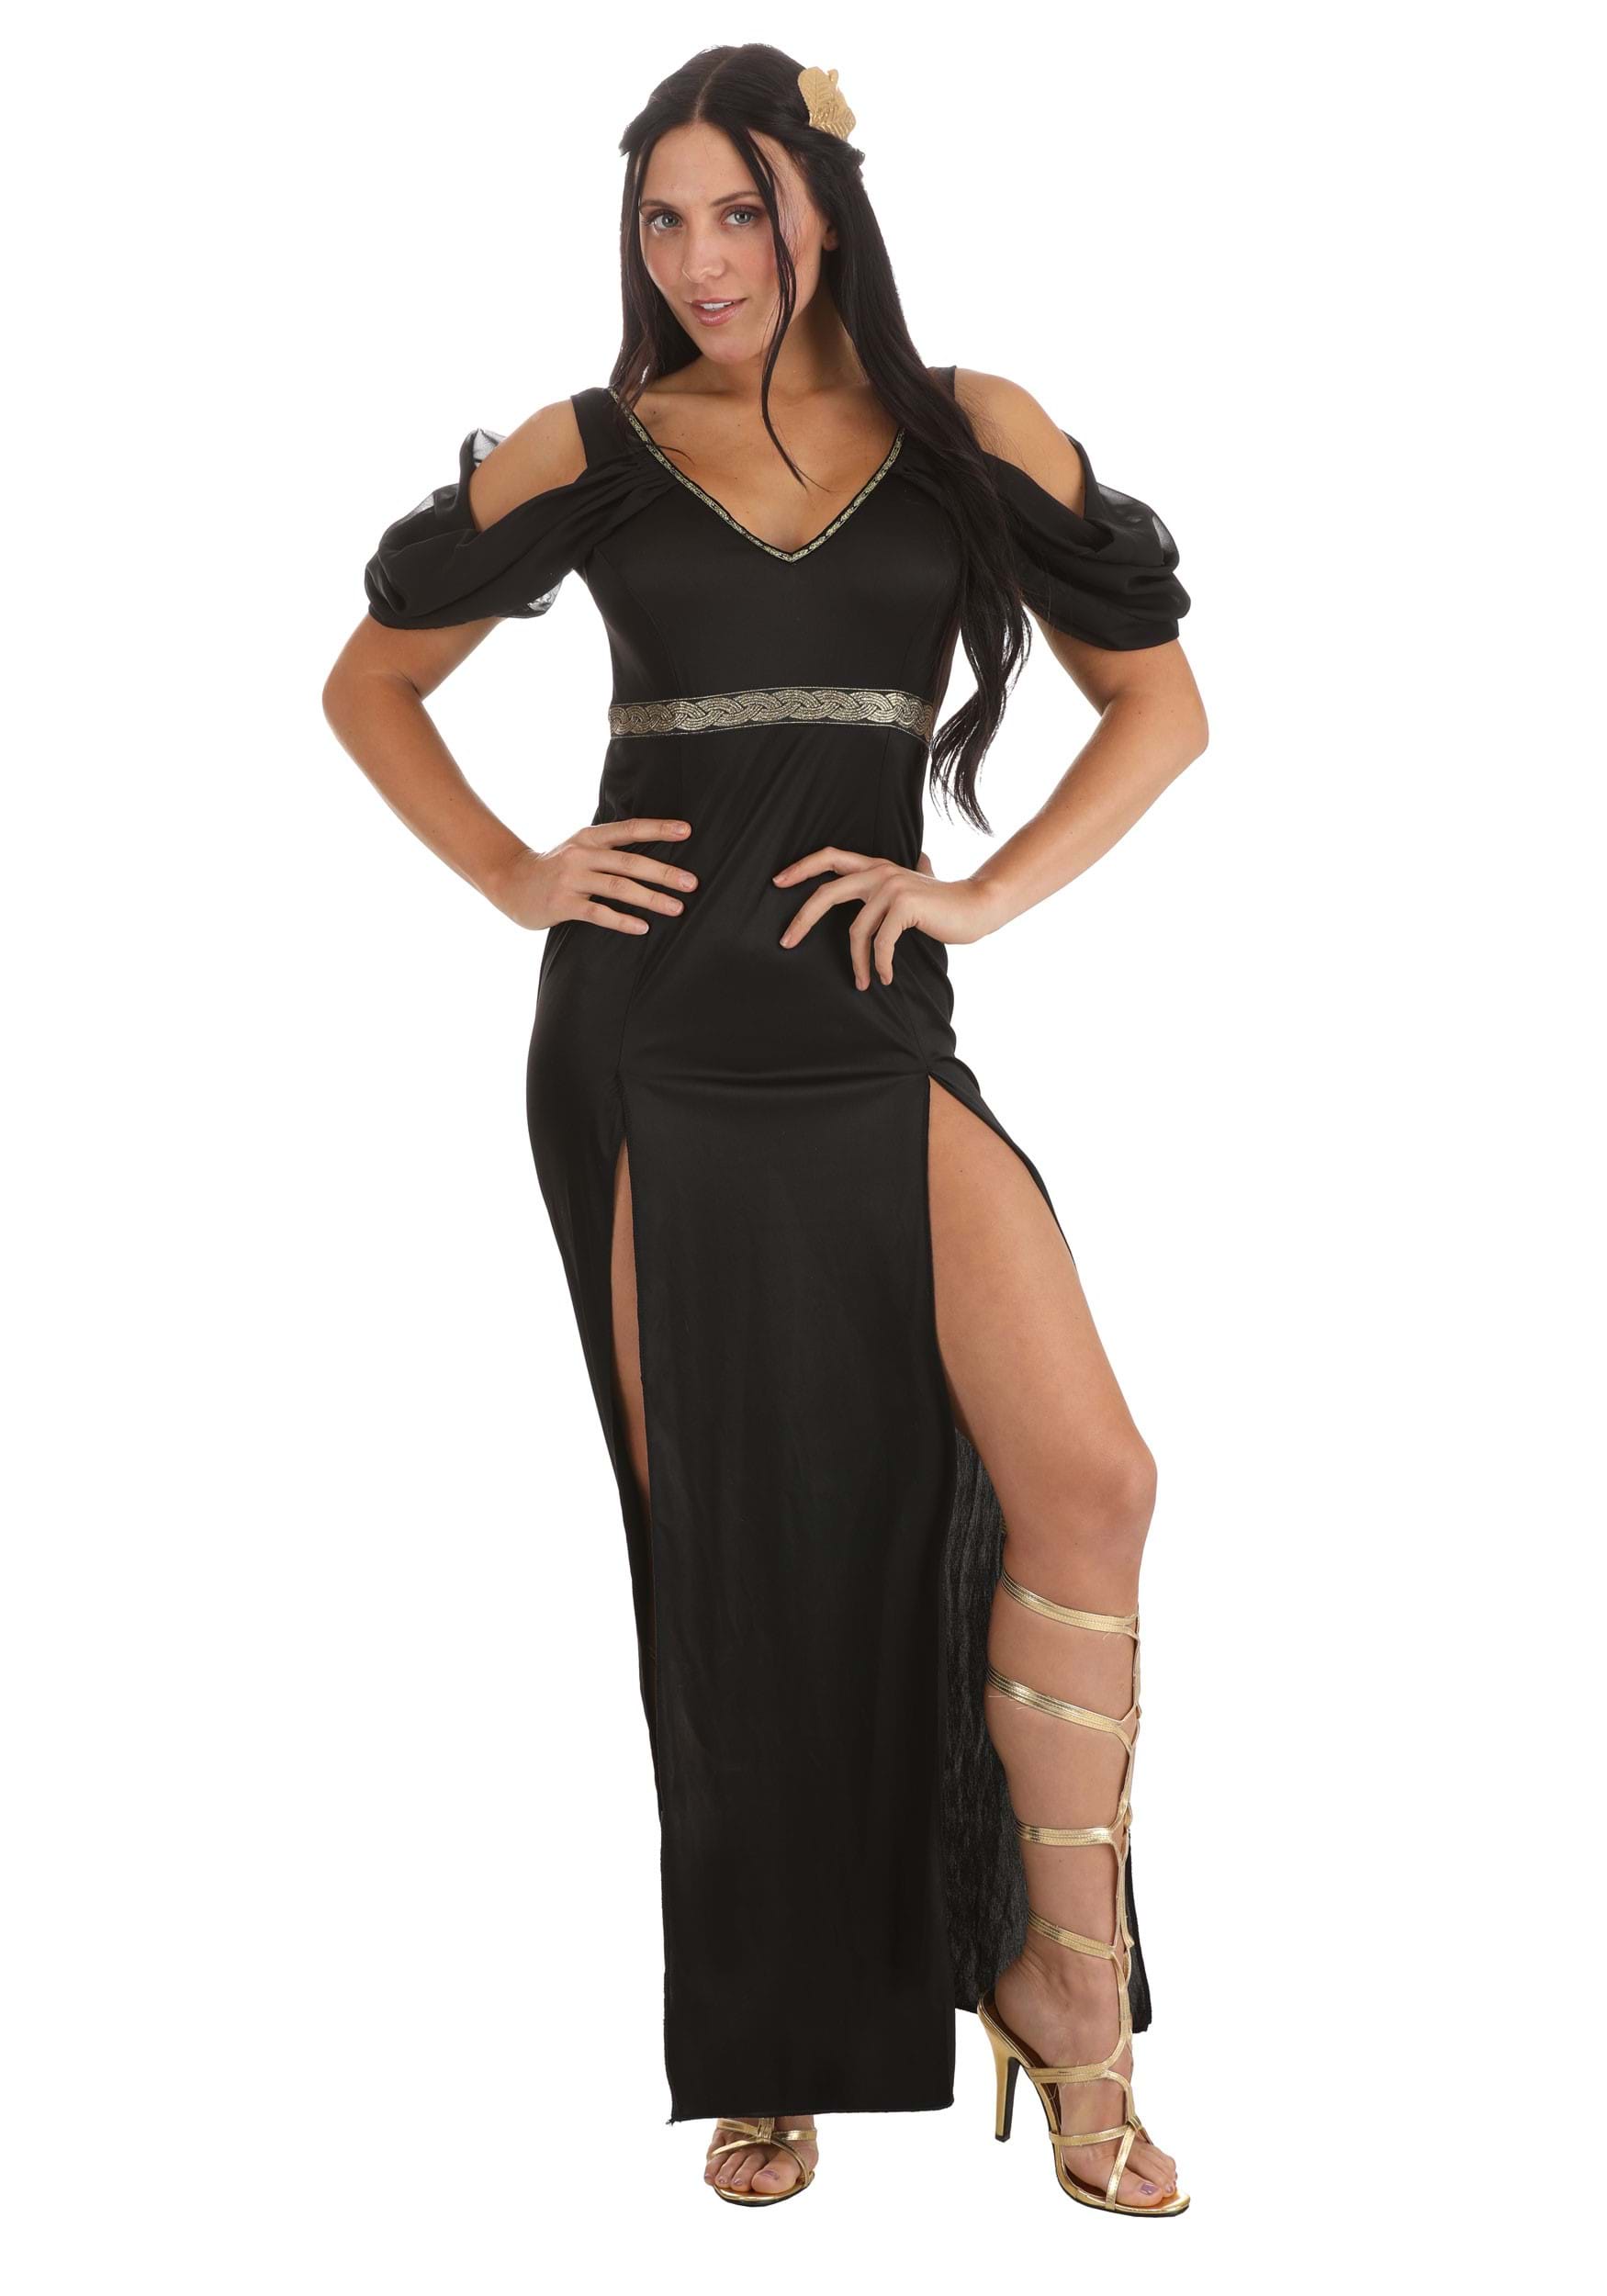 https://images.halloweencostumes.com/products/80114/1-1/womens-dark-goddess-costume-dress.jpg